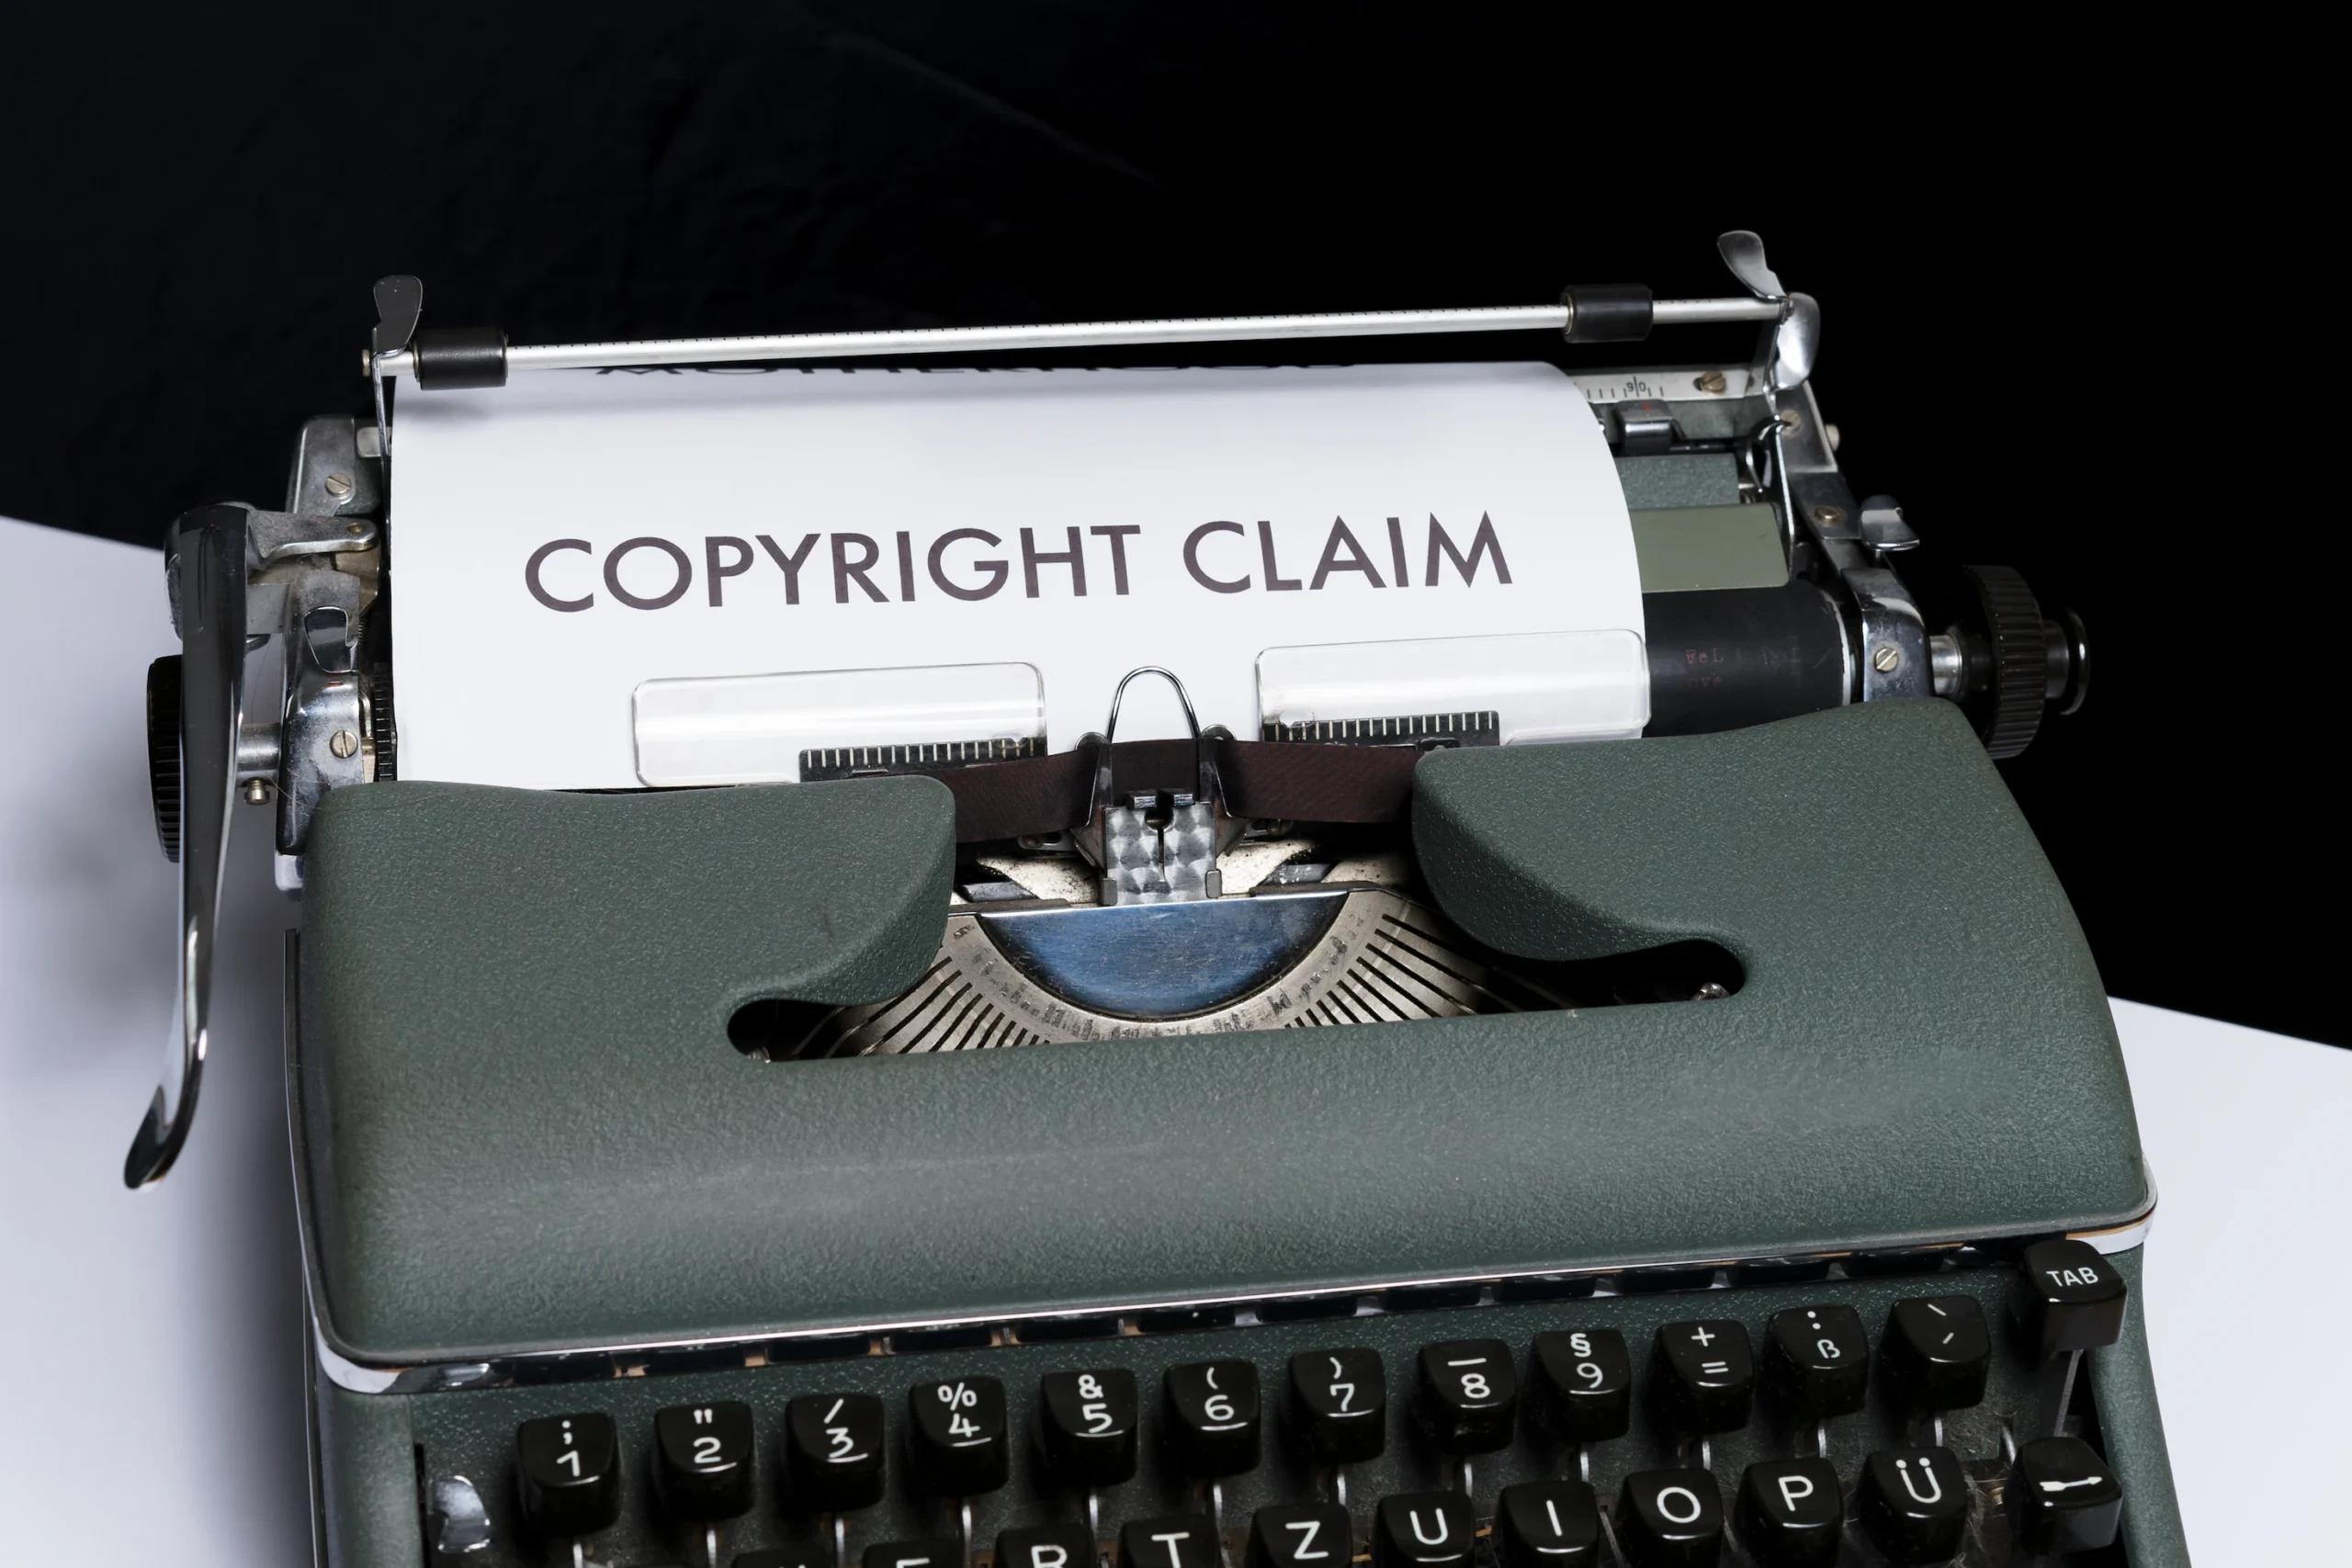 A typewriter printing out "Copyright Claim"